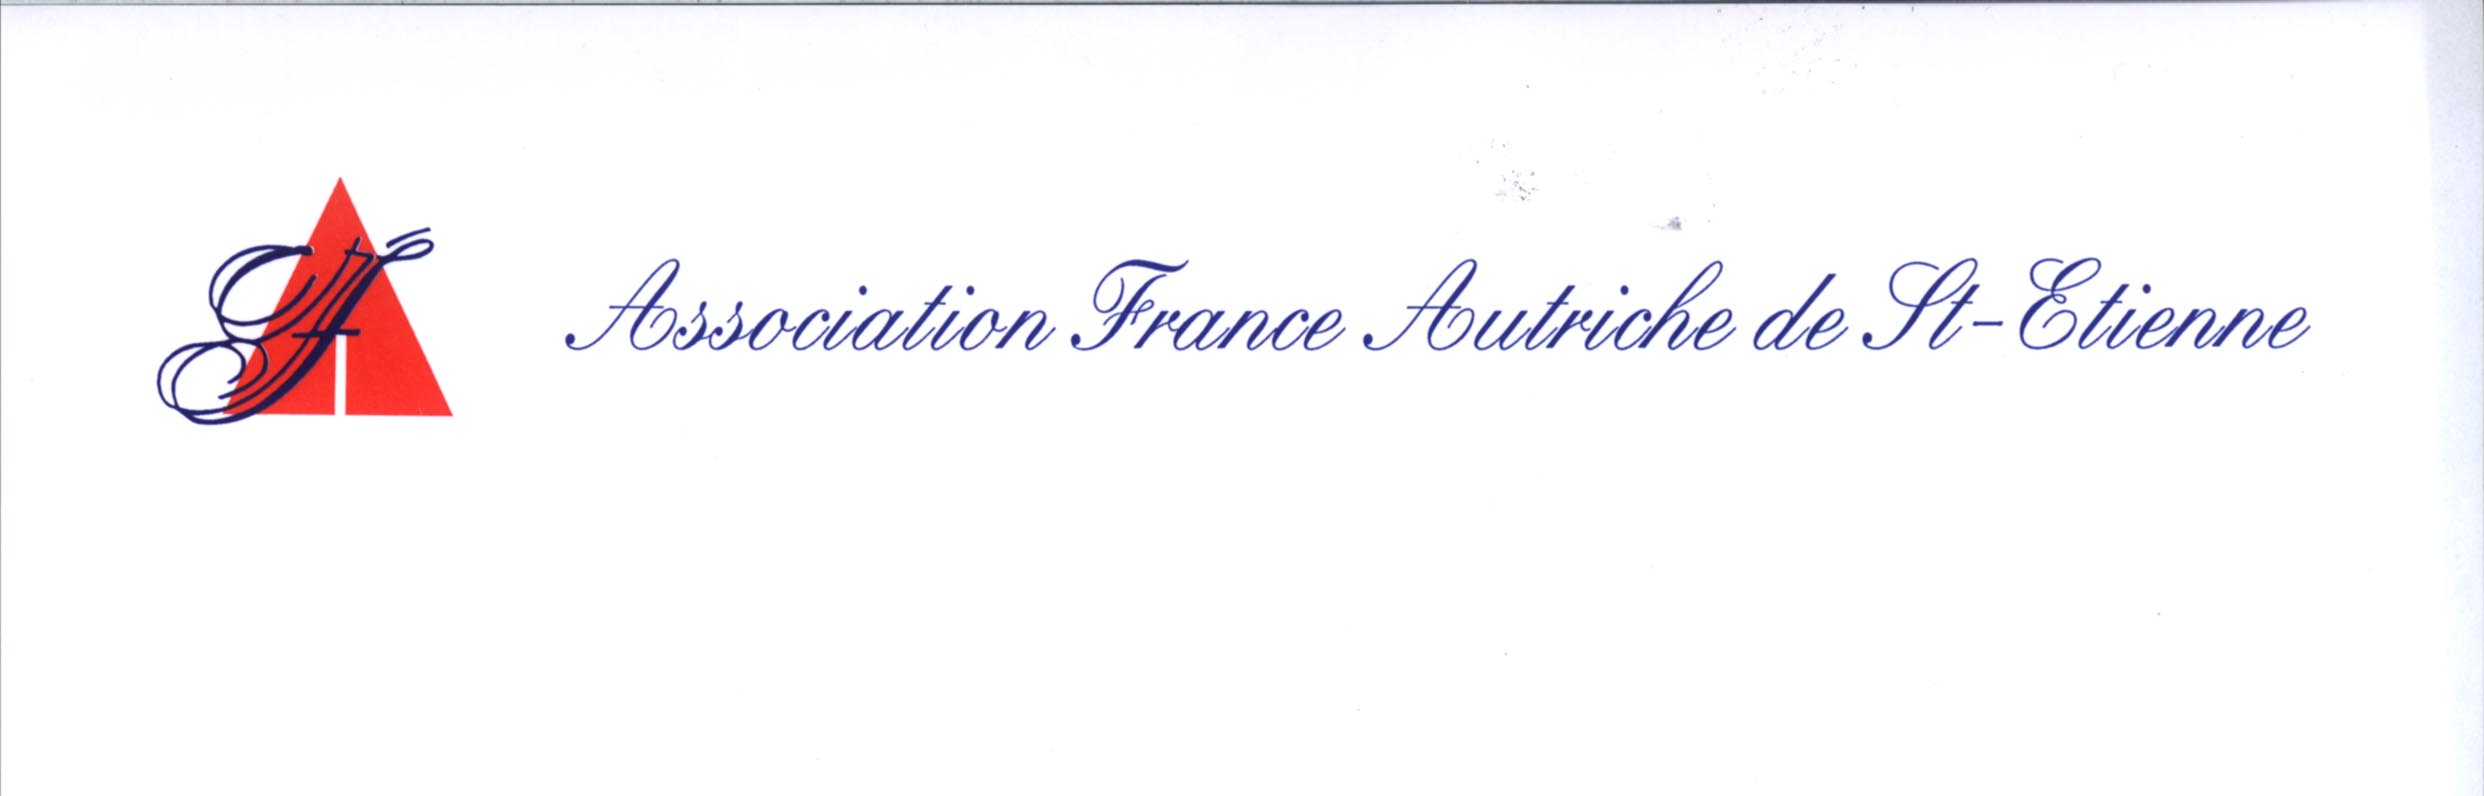 associationFA_logo.jpg